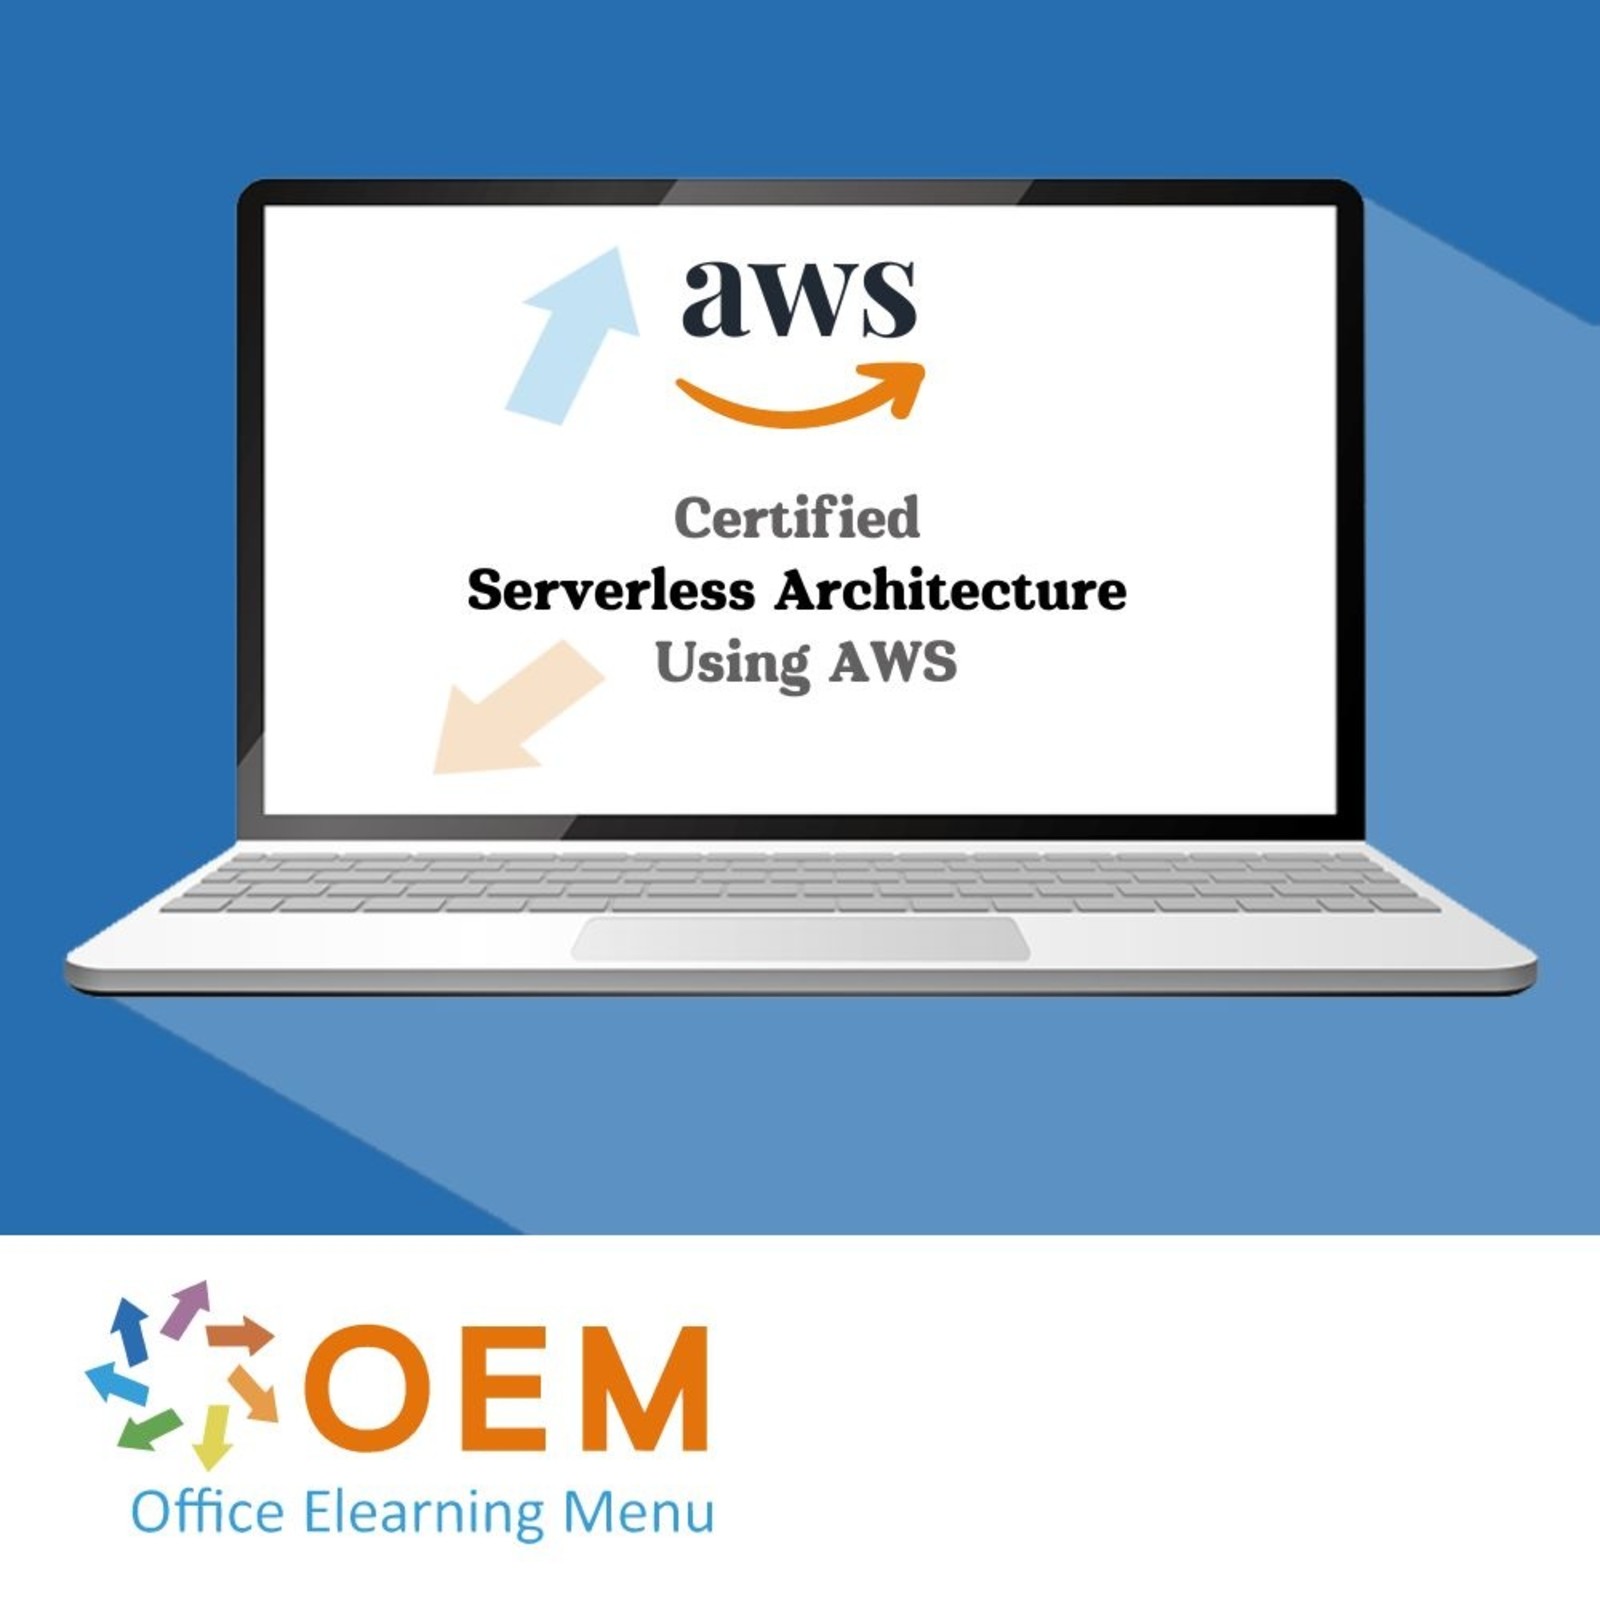 Amazon Web Services AWS Serverless Architecture Using AWS Training